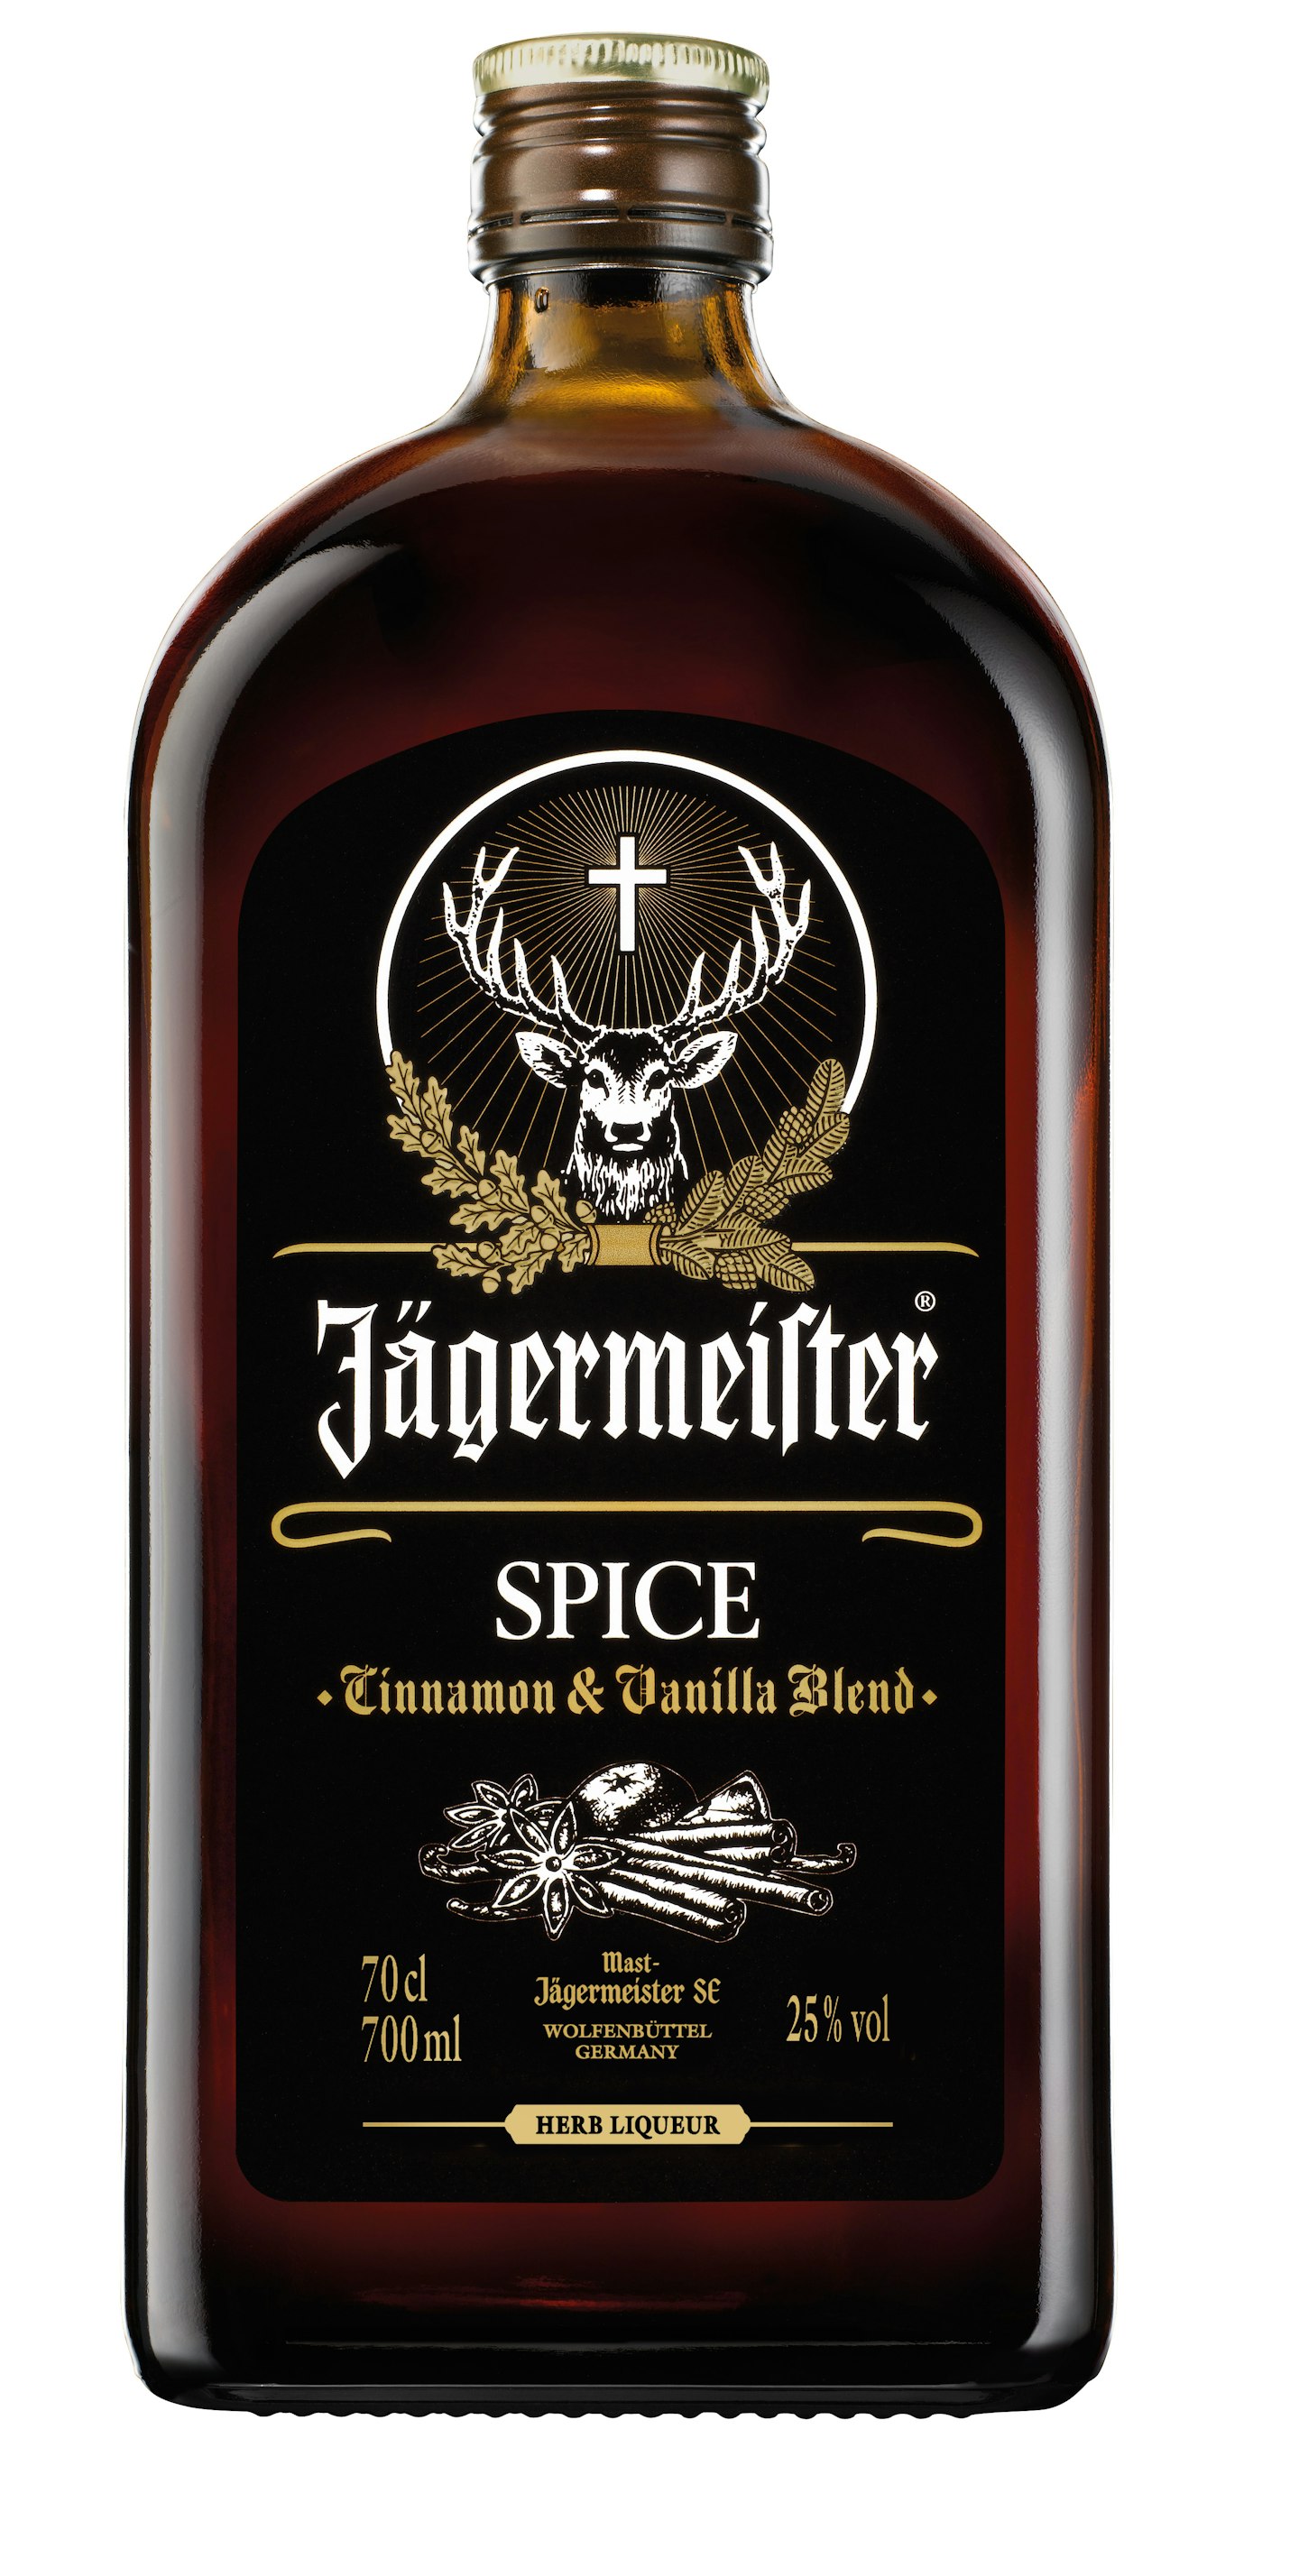 18, Jagermeister Spice, www.tesco.com